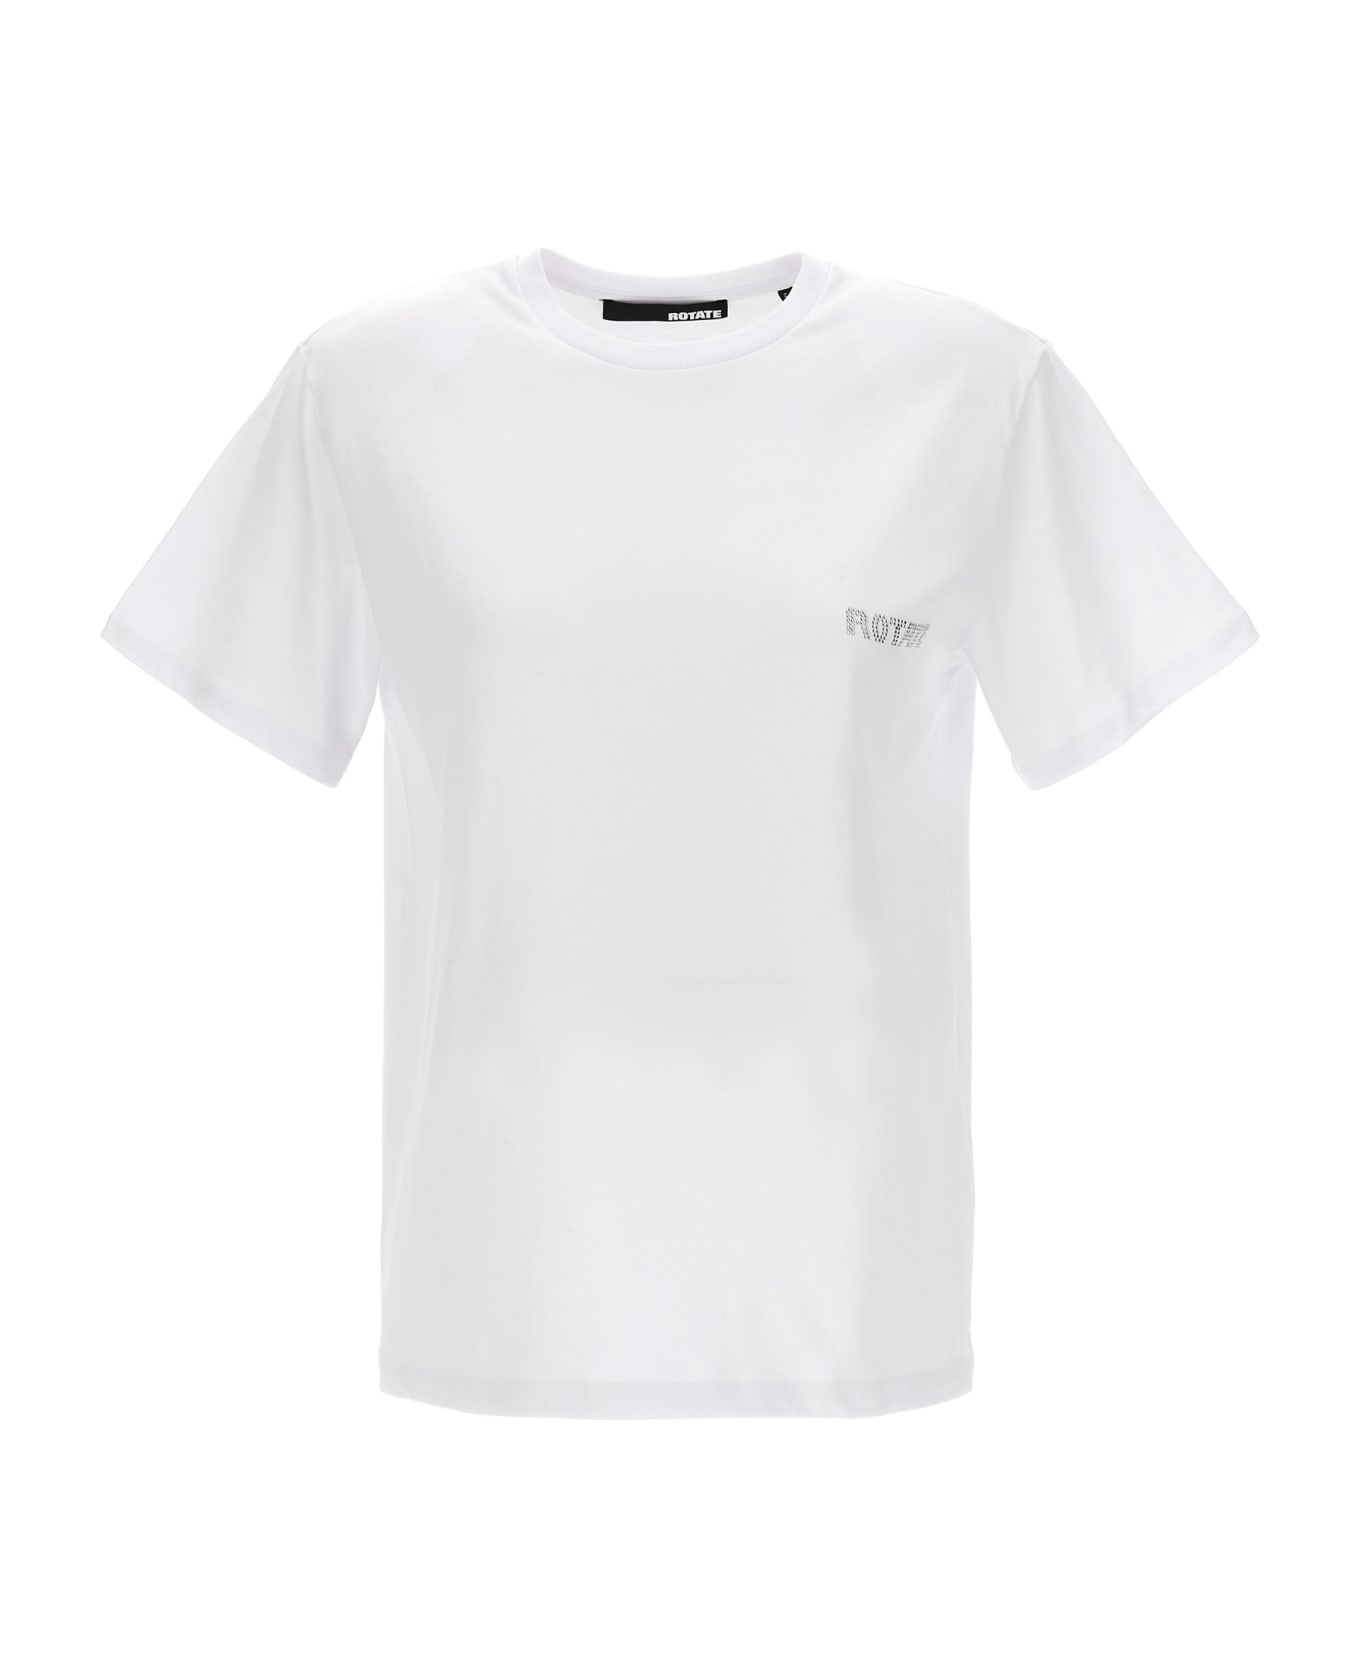 Rotate by Birger Christensen 'aja' T-shirt - White